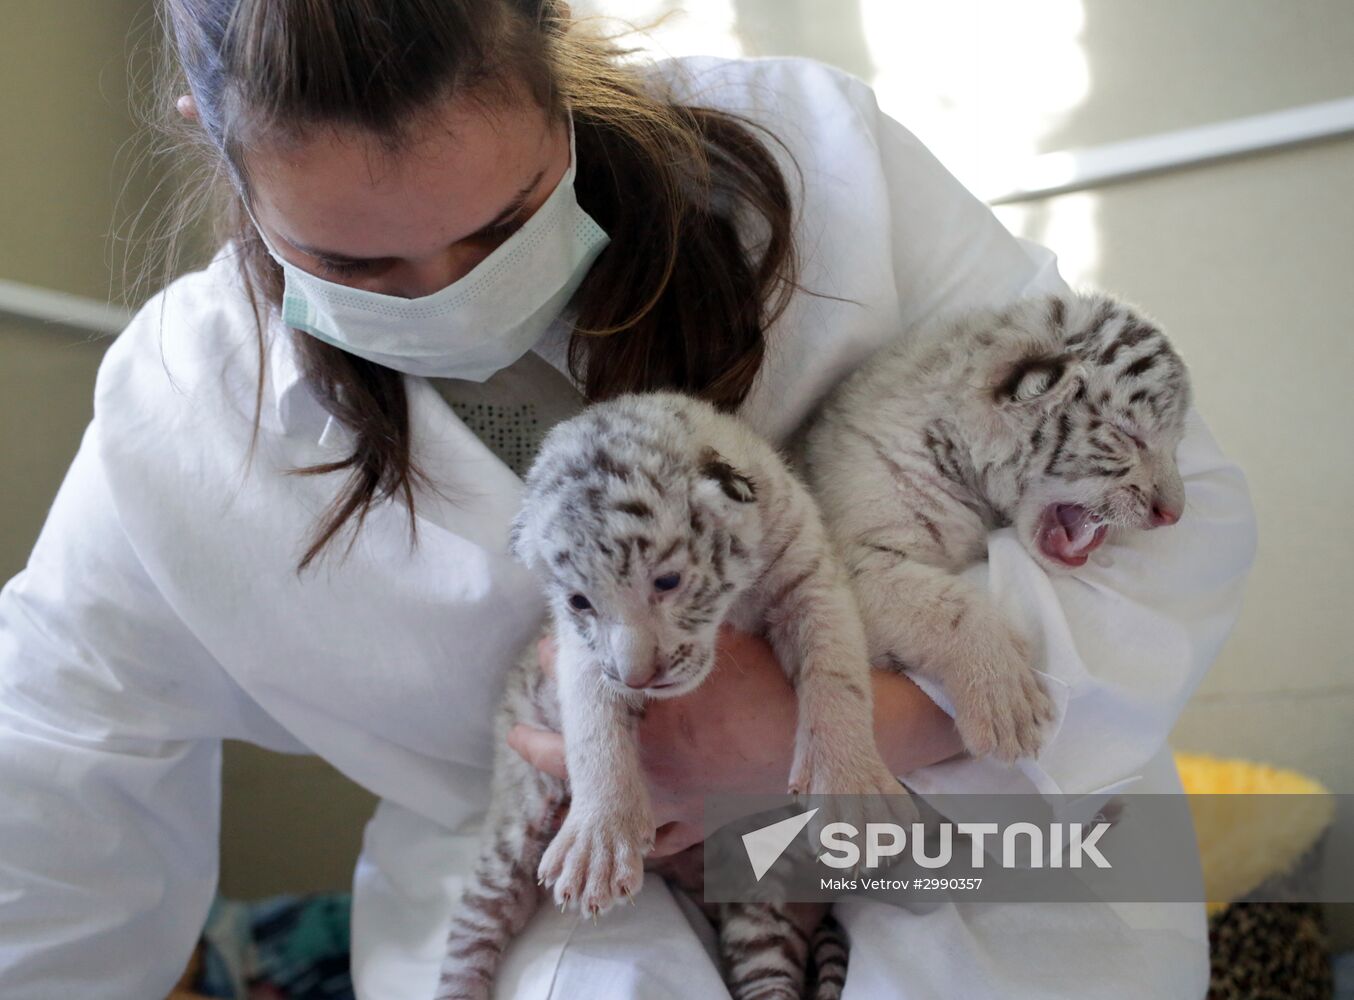 Three rare white tiger cubs born in Crimean zoo